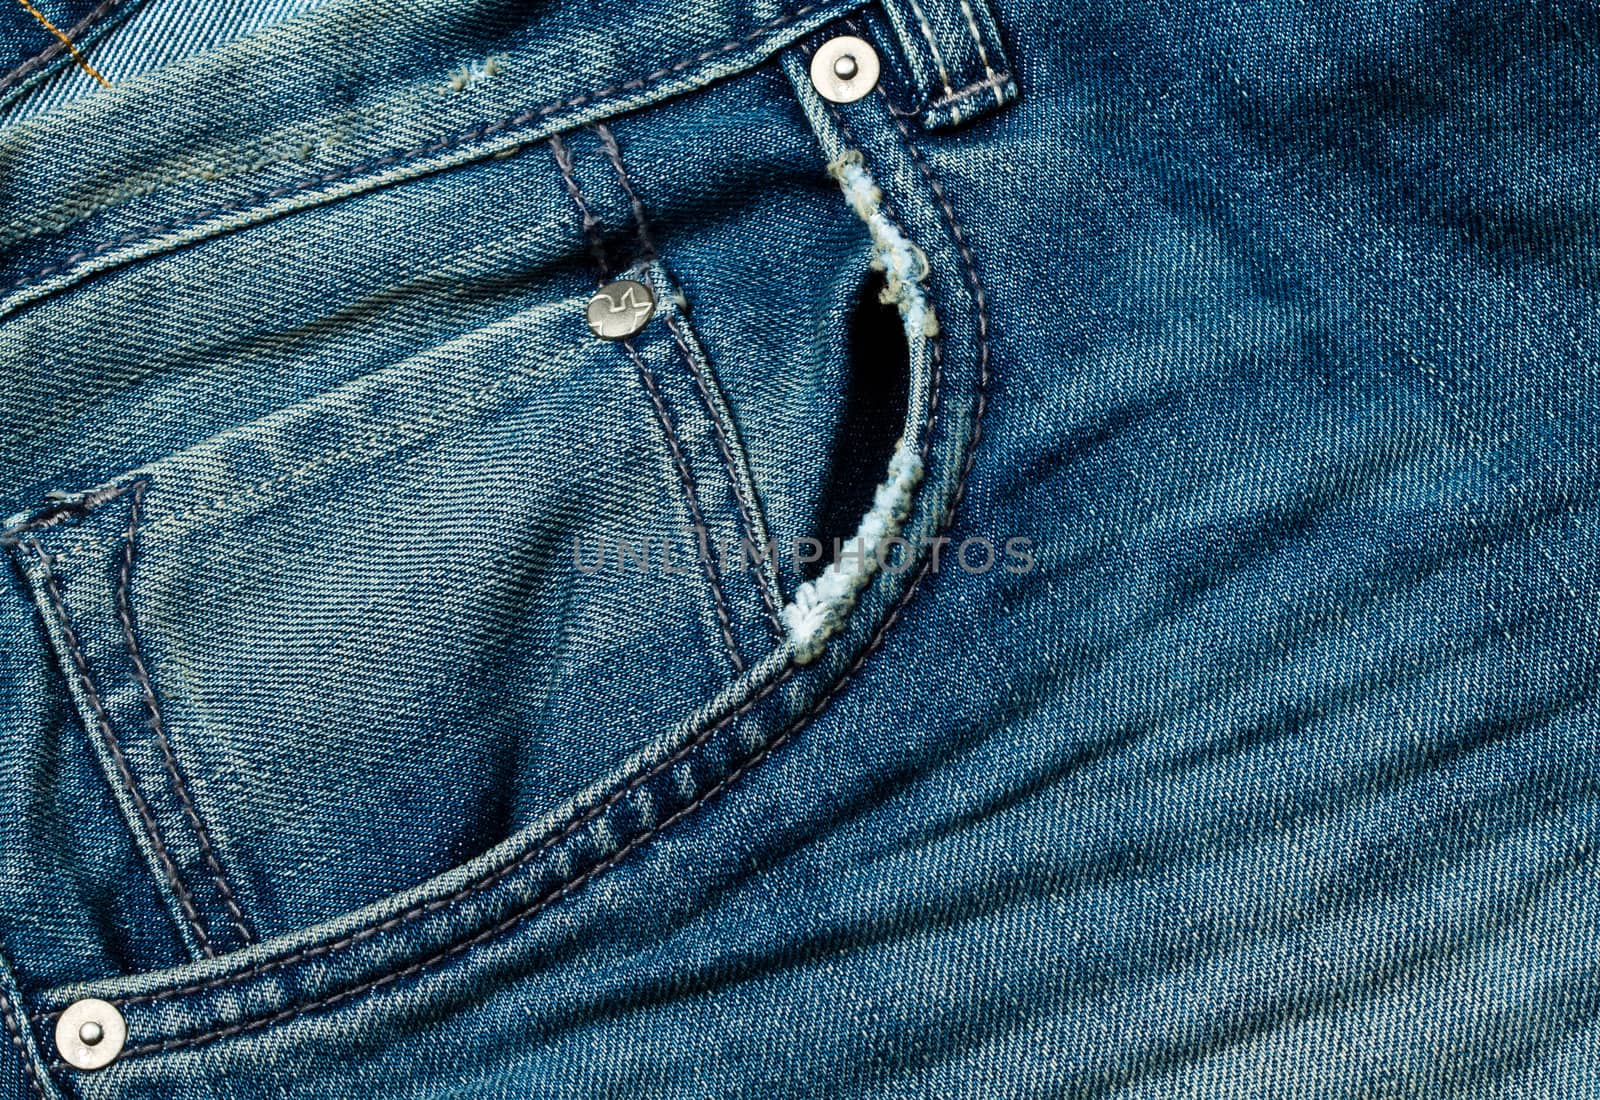 denim blue jeans pocket by lsantilli